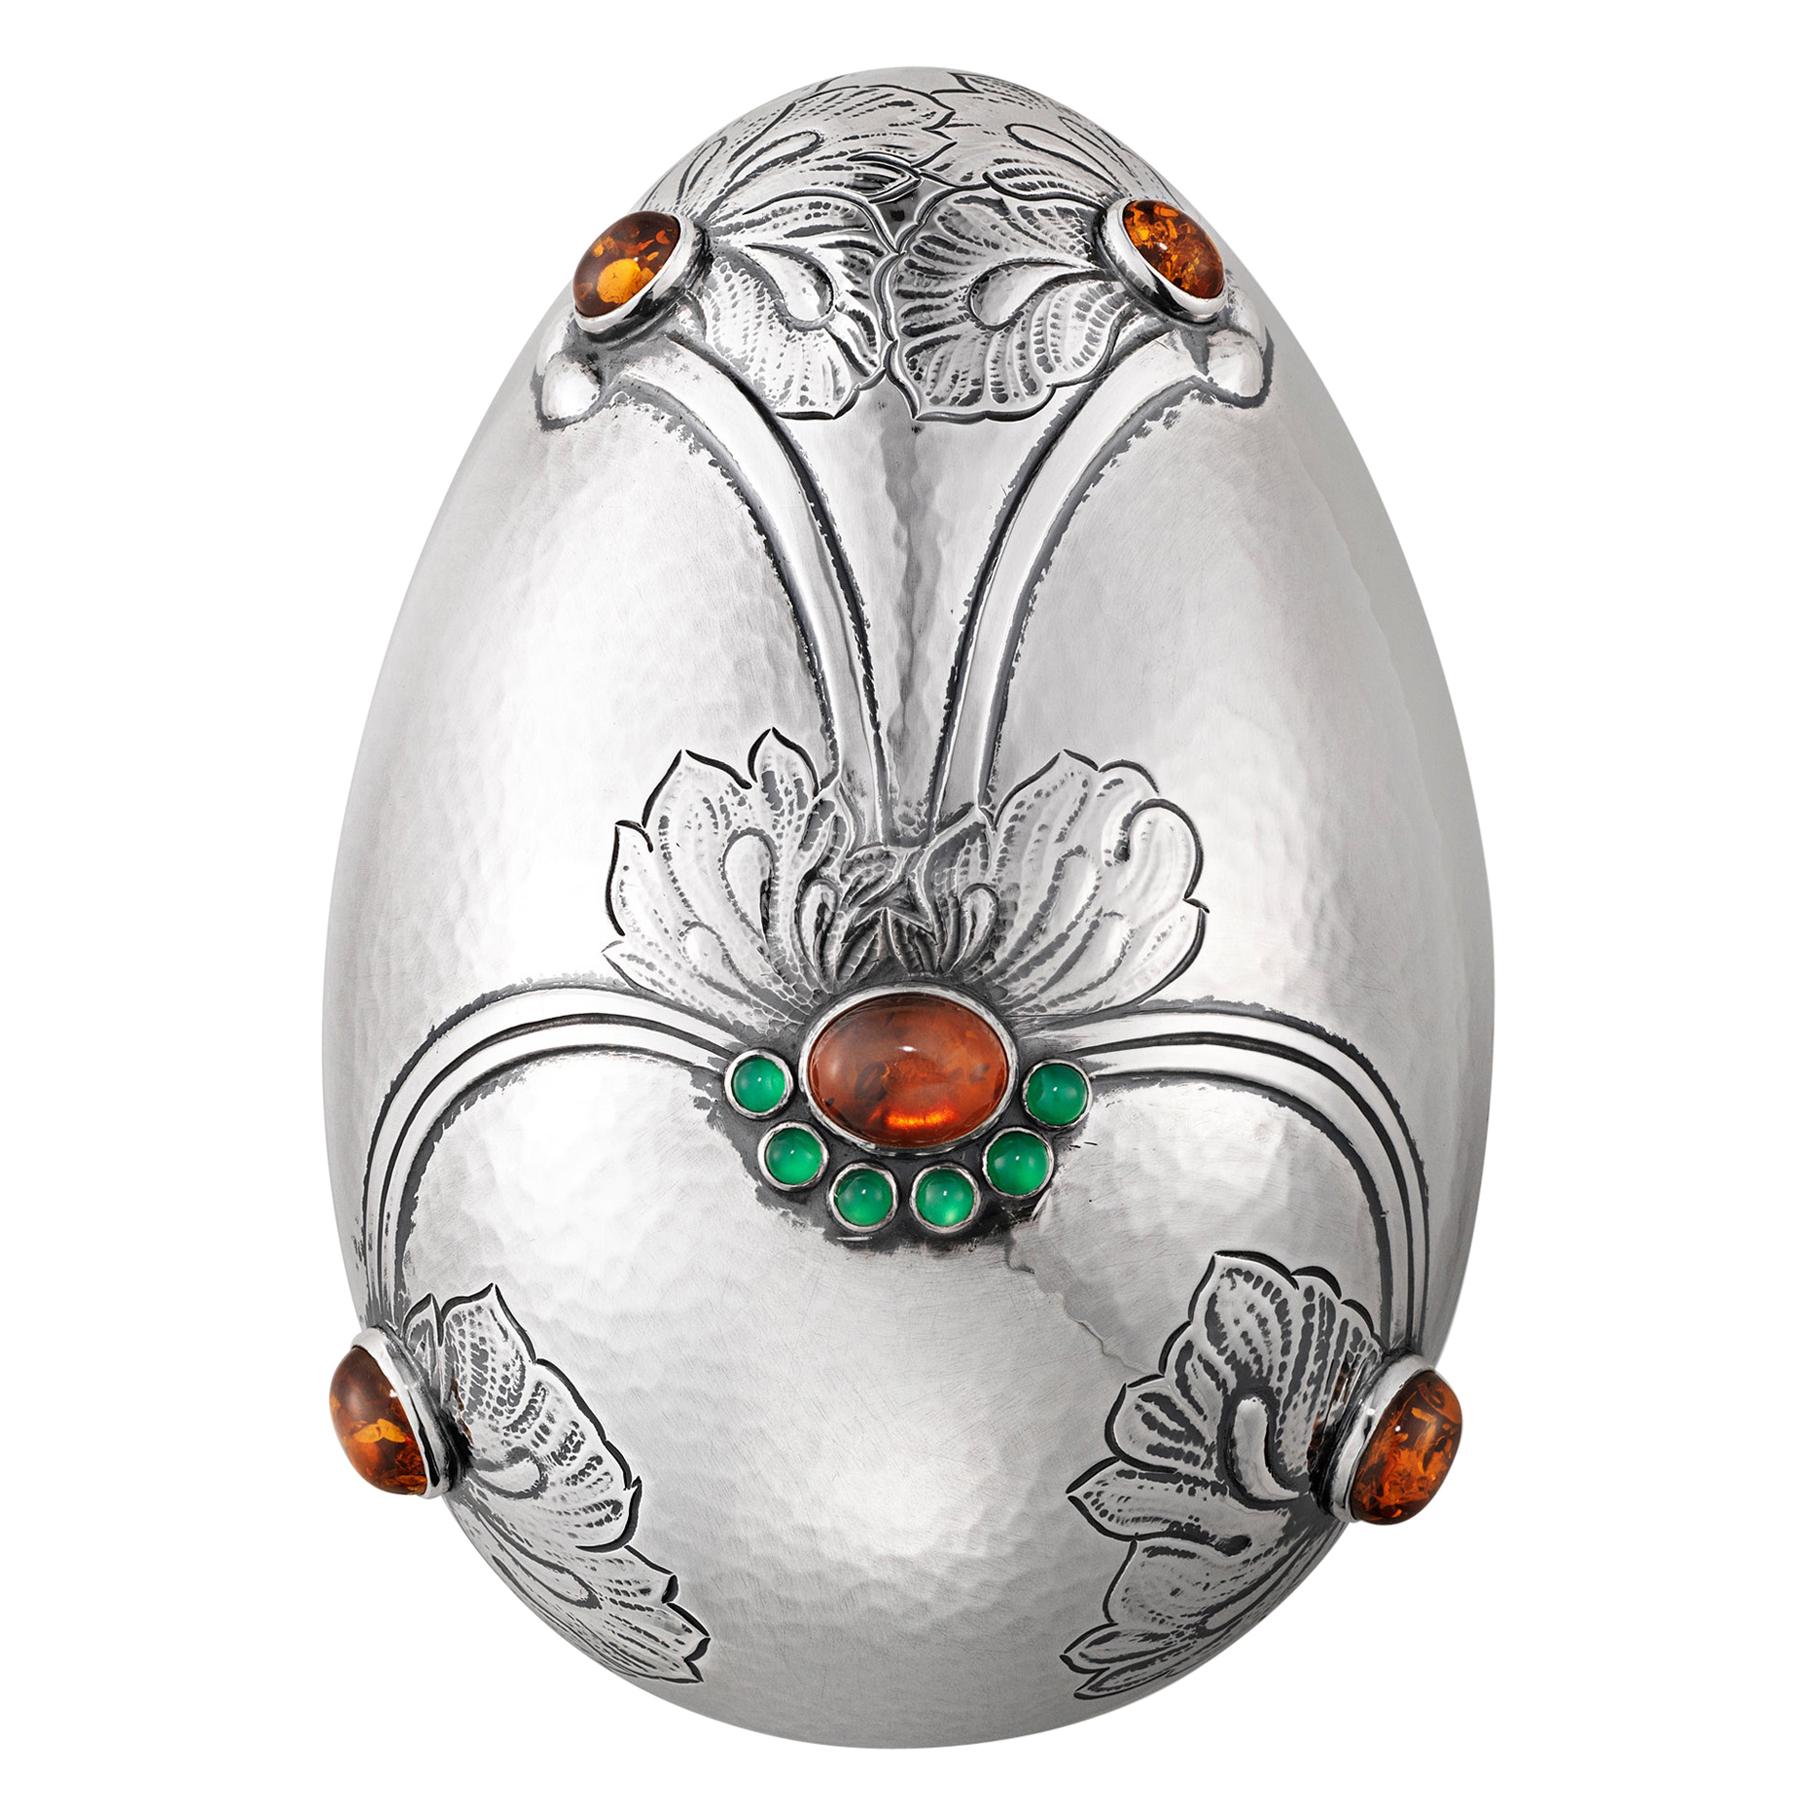 Georg Jensen Handcrafted Sterling Silver Egg by Gj Amber/Gr. Agate